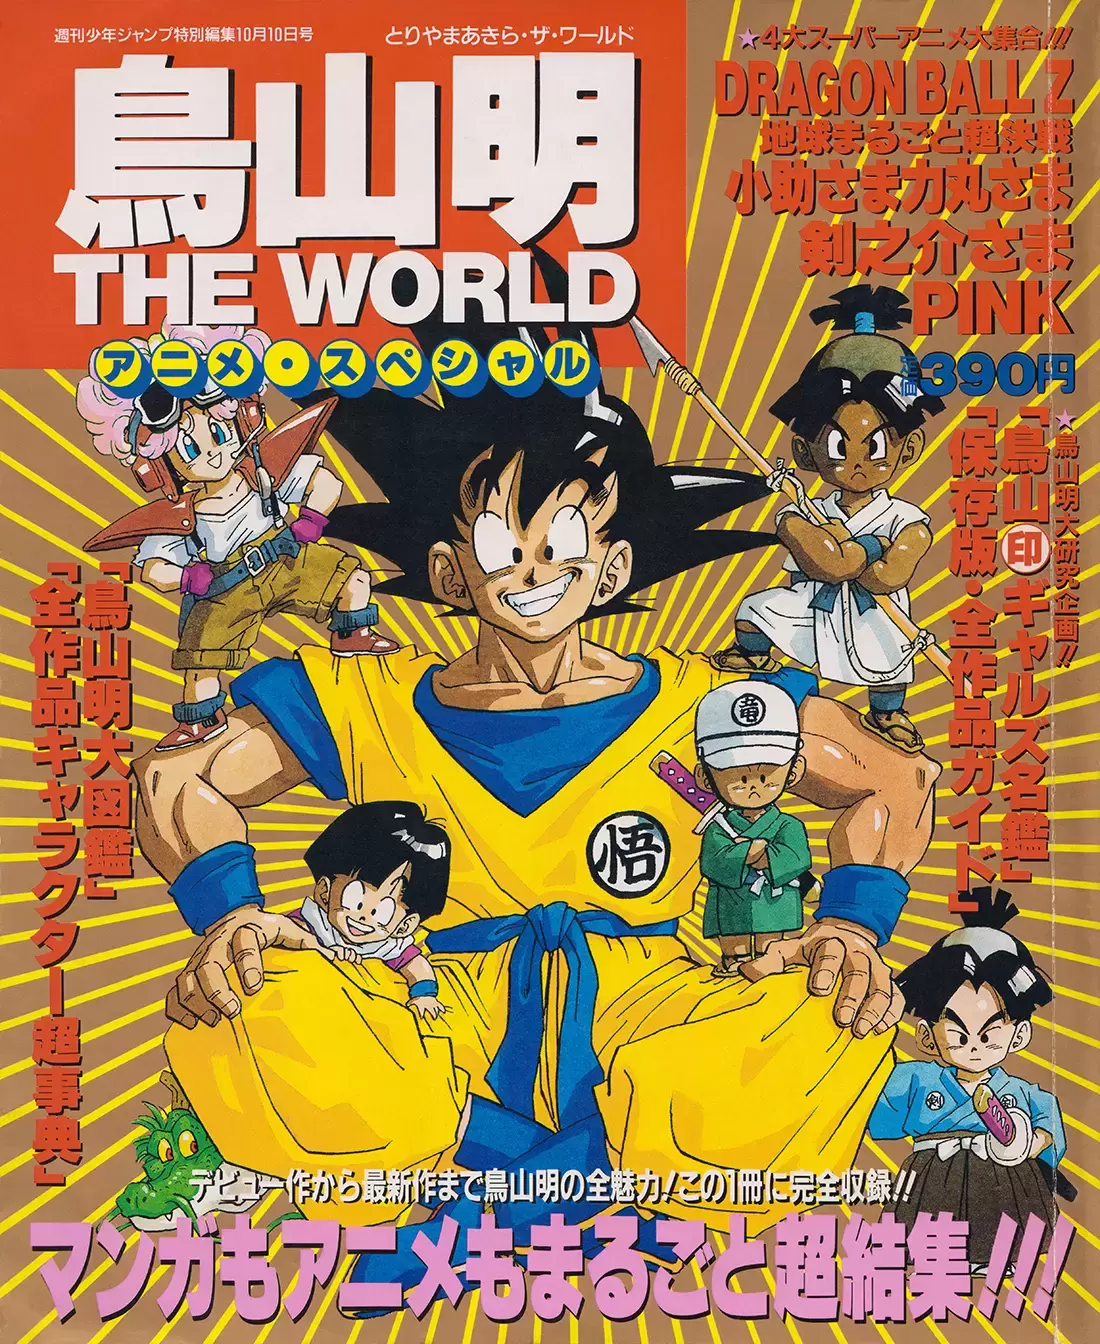 Dragon Ball Divers - Akira Toriyama - The World Anime Special